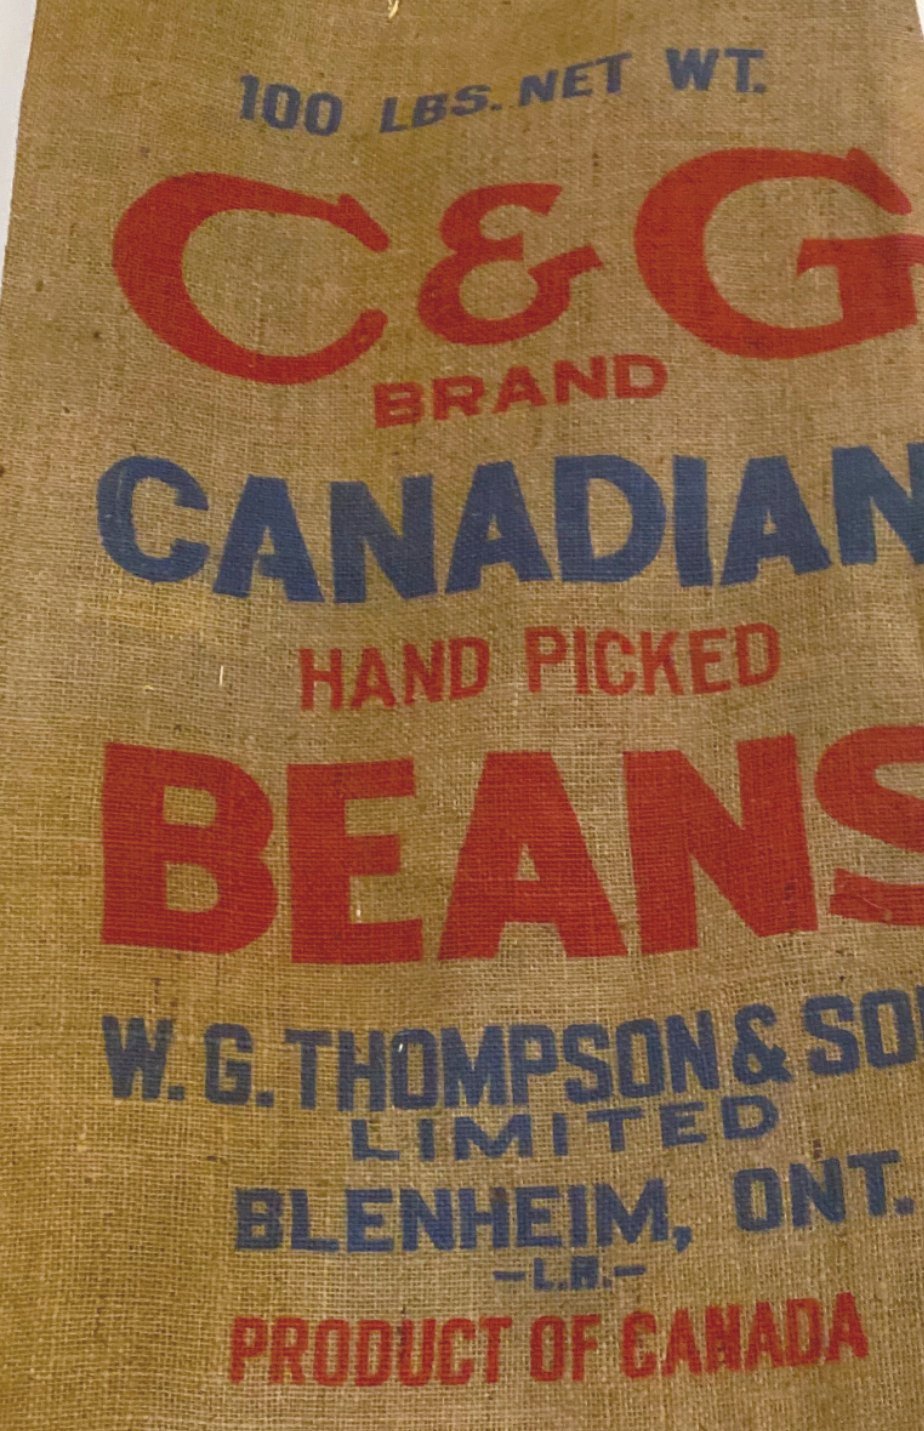 C&G Canadian Bean Bag - Classic & Kitsch